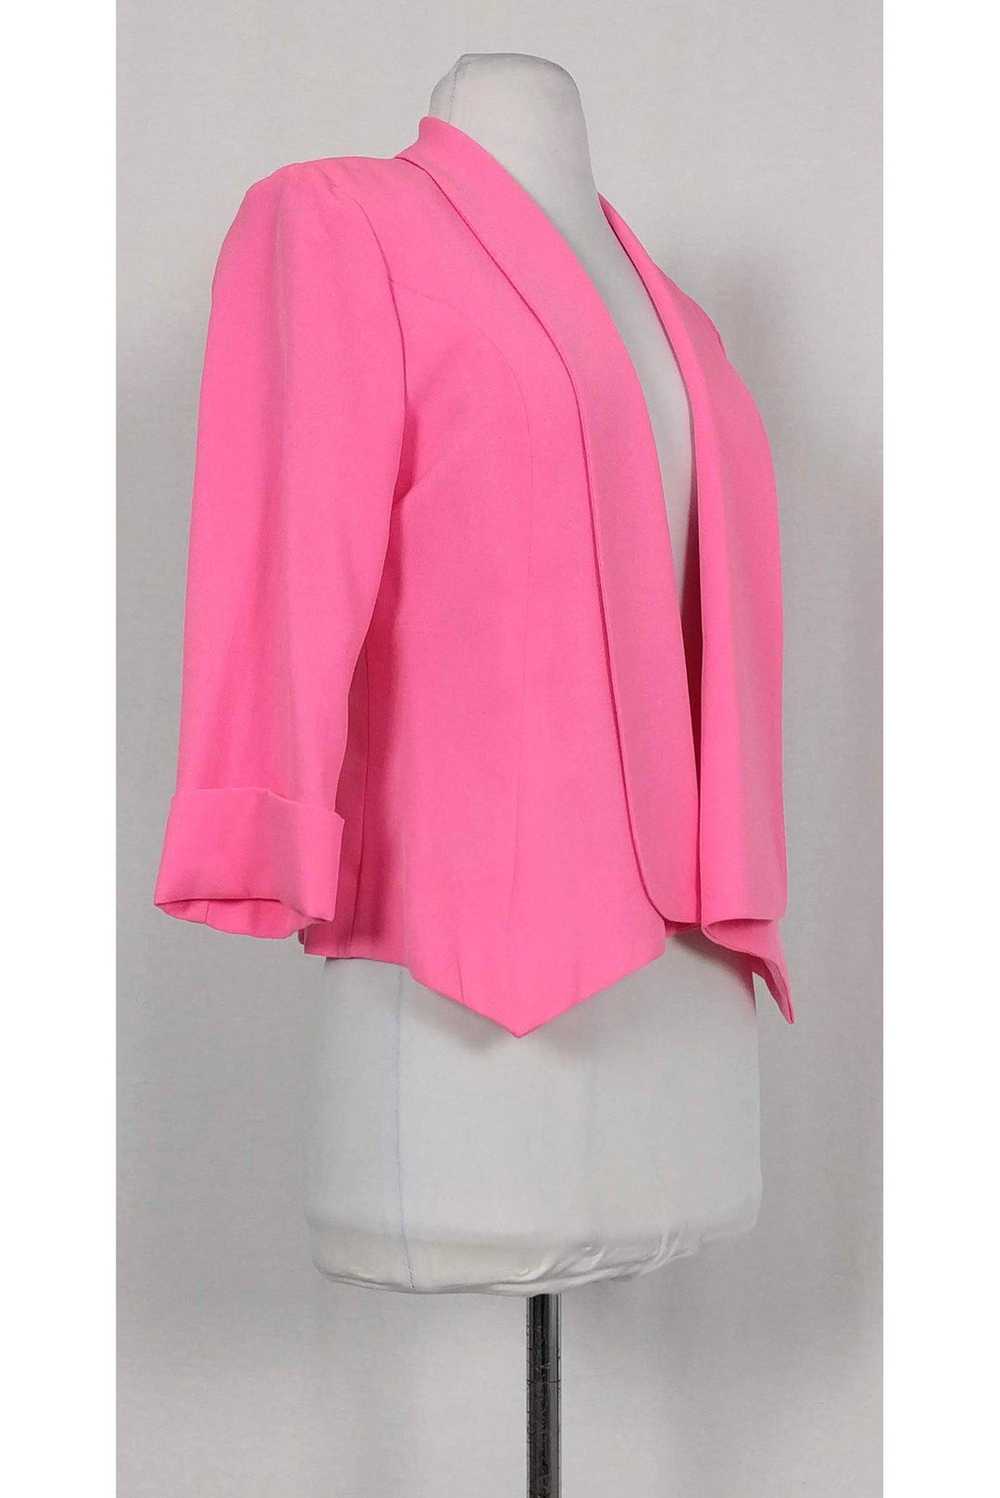 Alberto Makali - Neon Pink Asymmetrical Jacket Sz… - image 2